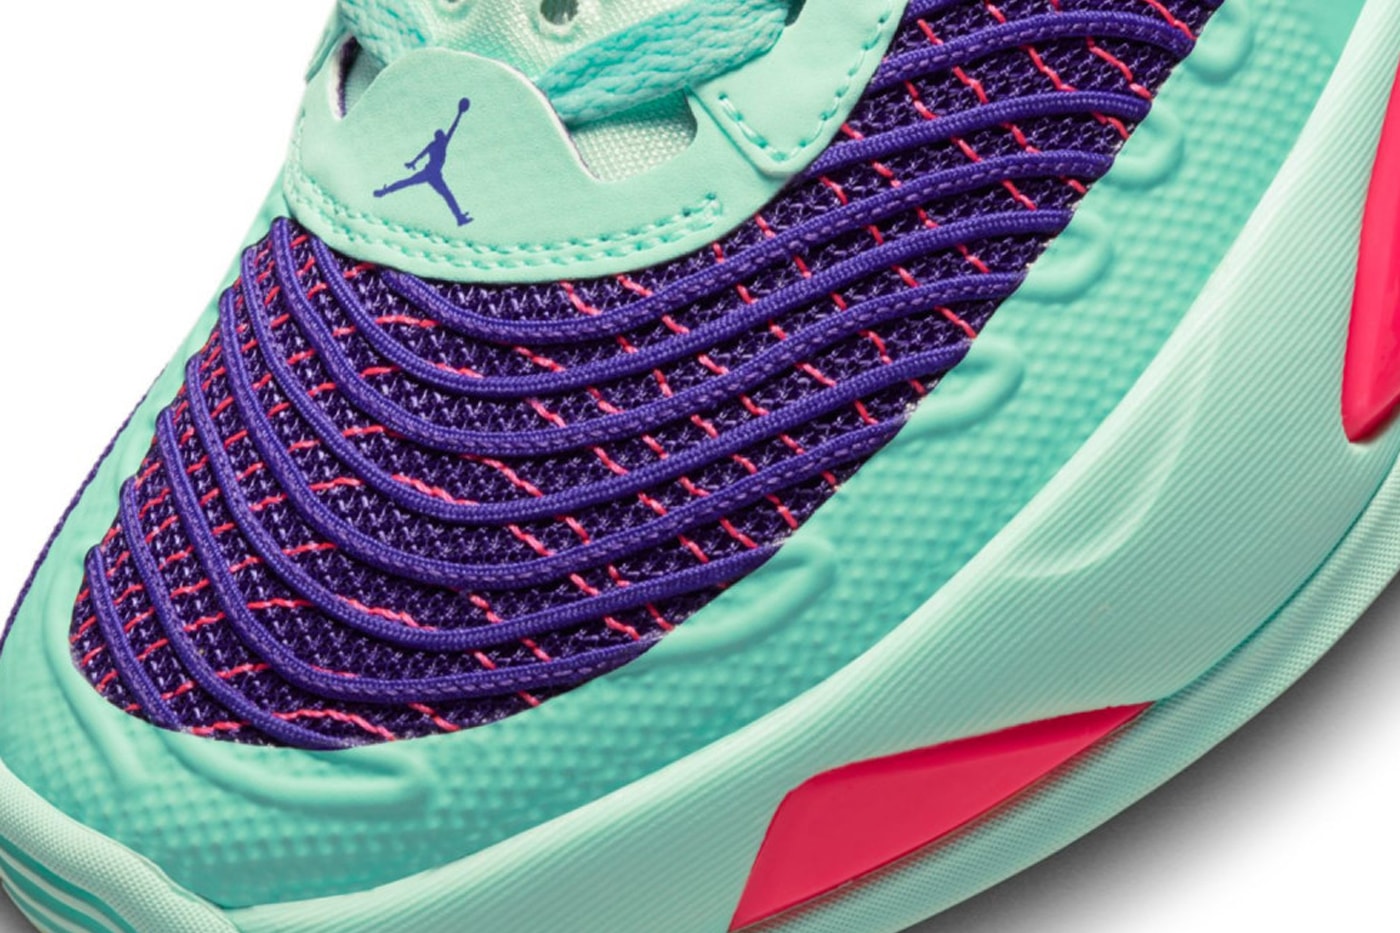 The Jordan Luka 1 Arrives in an Easter-Ready Colorway easter DN1772-305 basketball shoes nba dallas mavericks no. 77 slovenia easter egg colors Mint Foam/Racer Pink/Court Purple